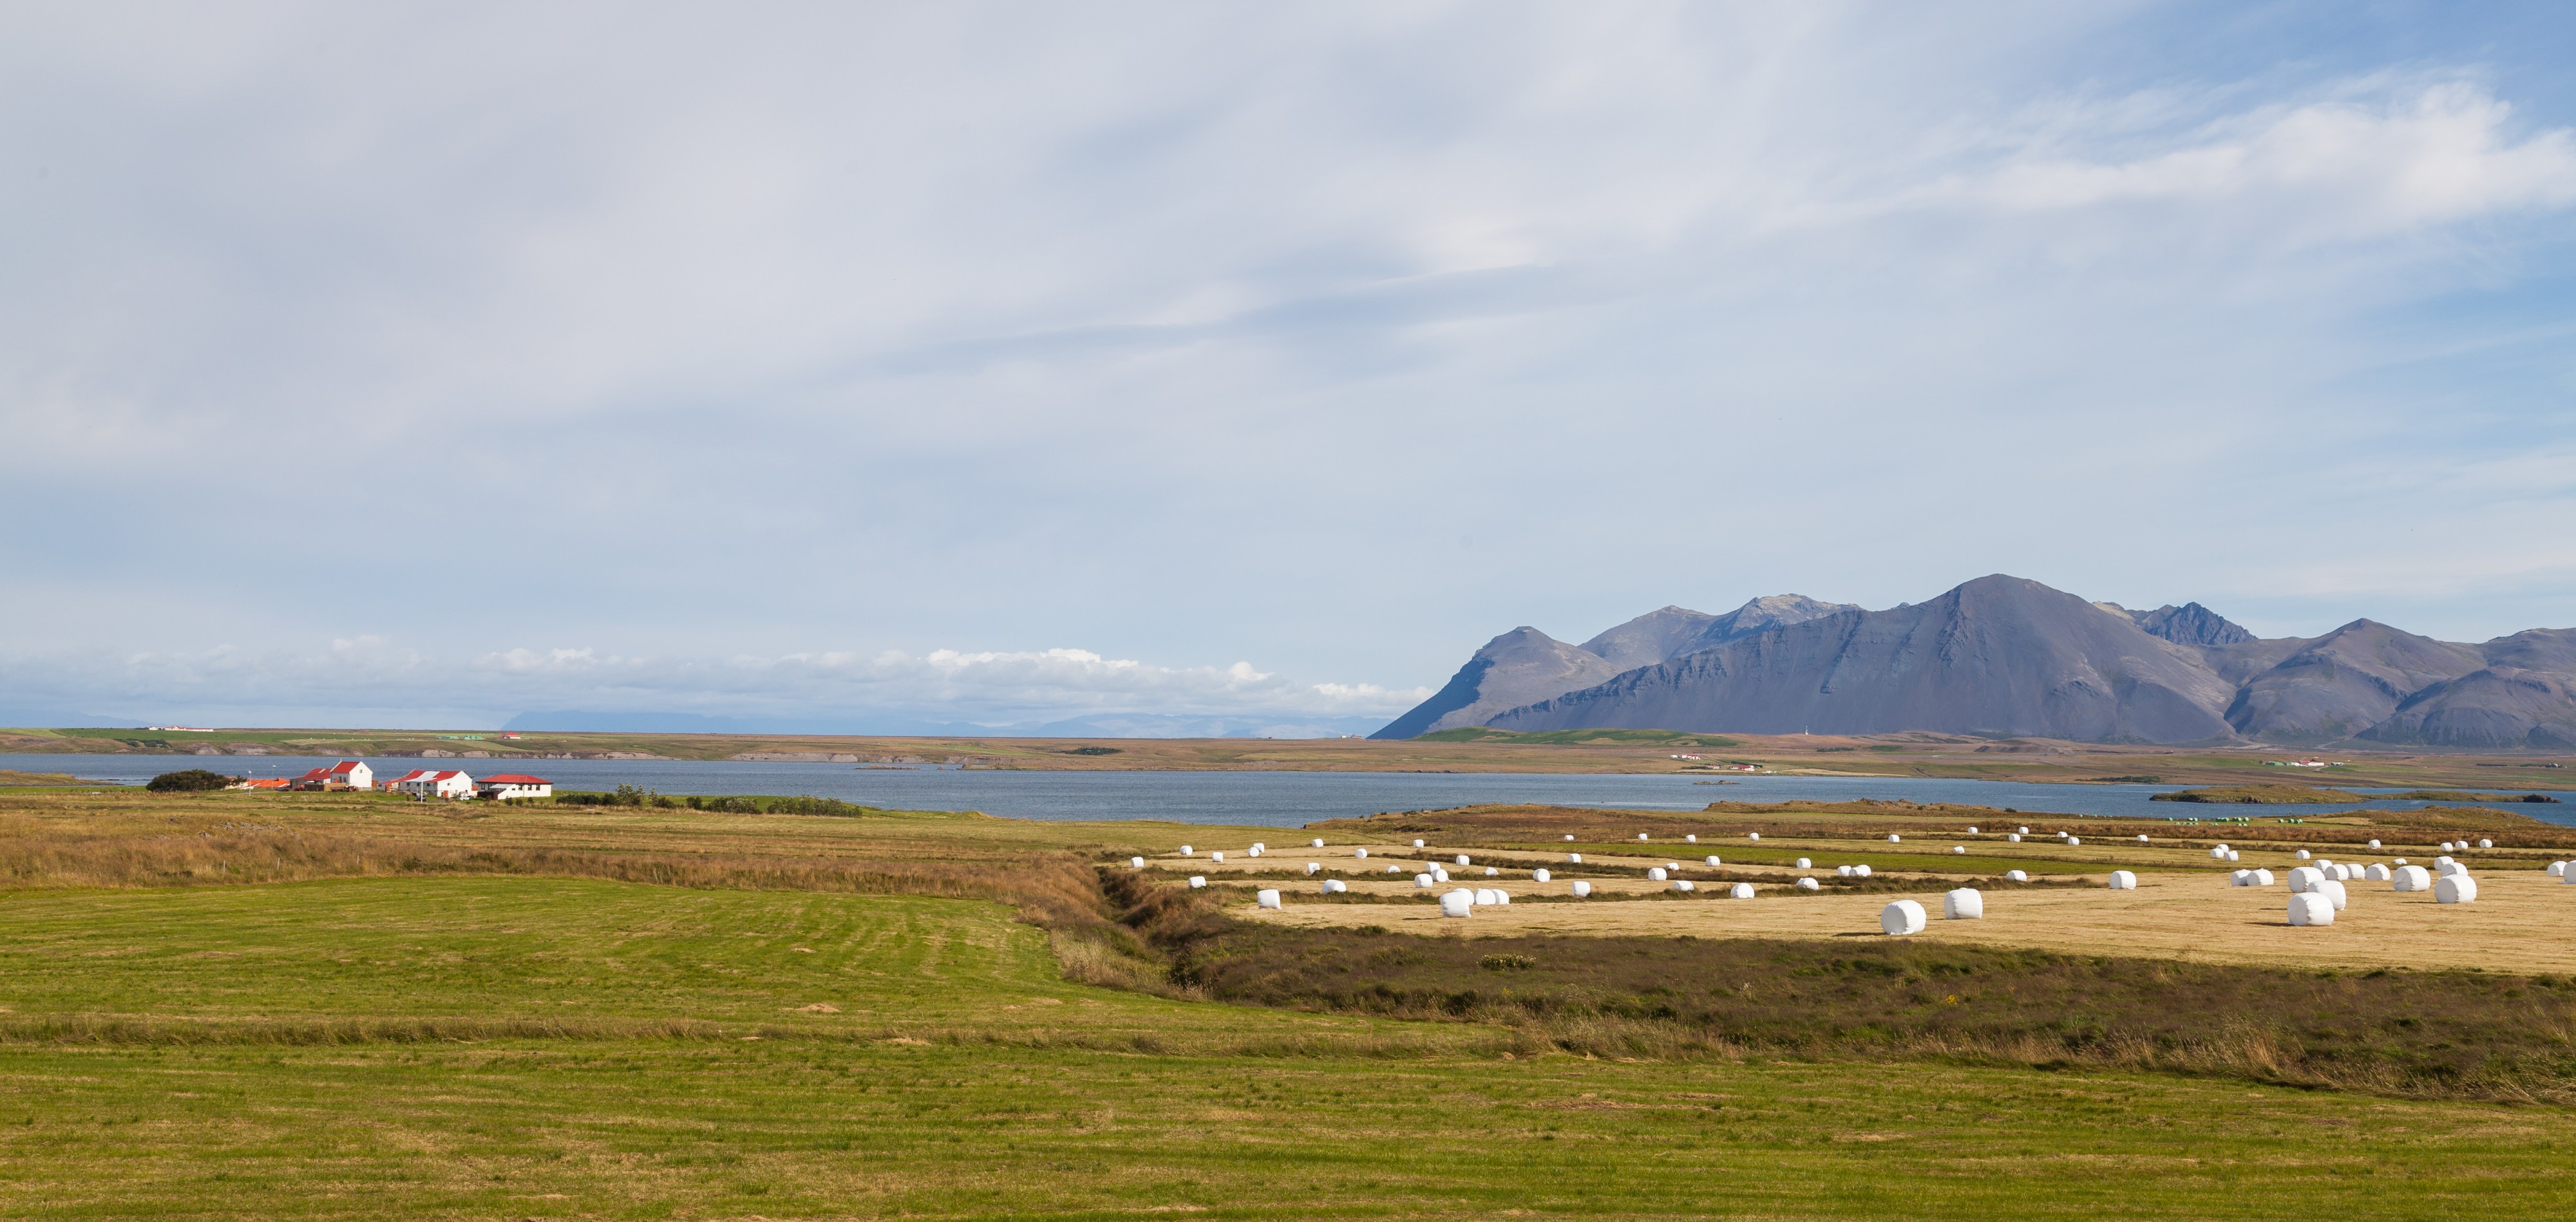 Balas de paja, Akranes, Vesturland, Islandia, 2014-08-14, DD 018